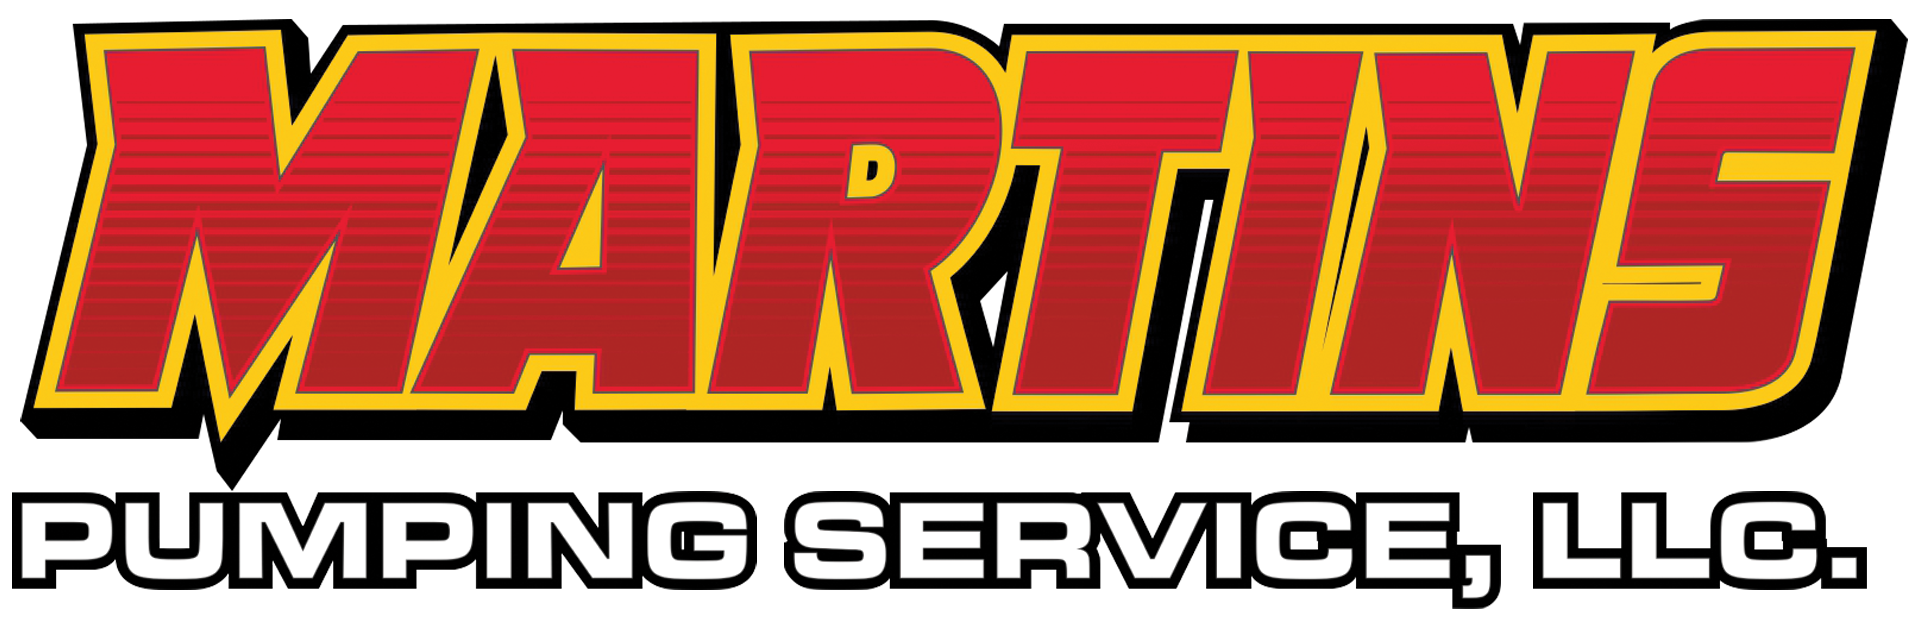 Martins Pumping Service LLC